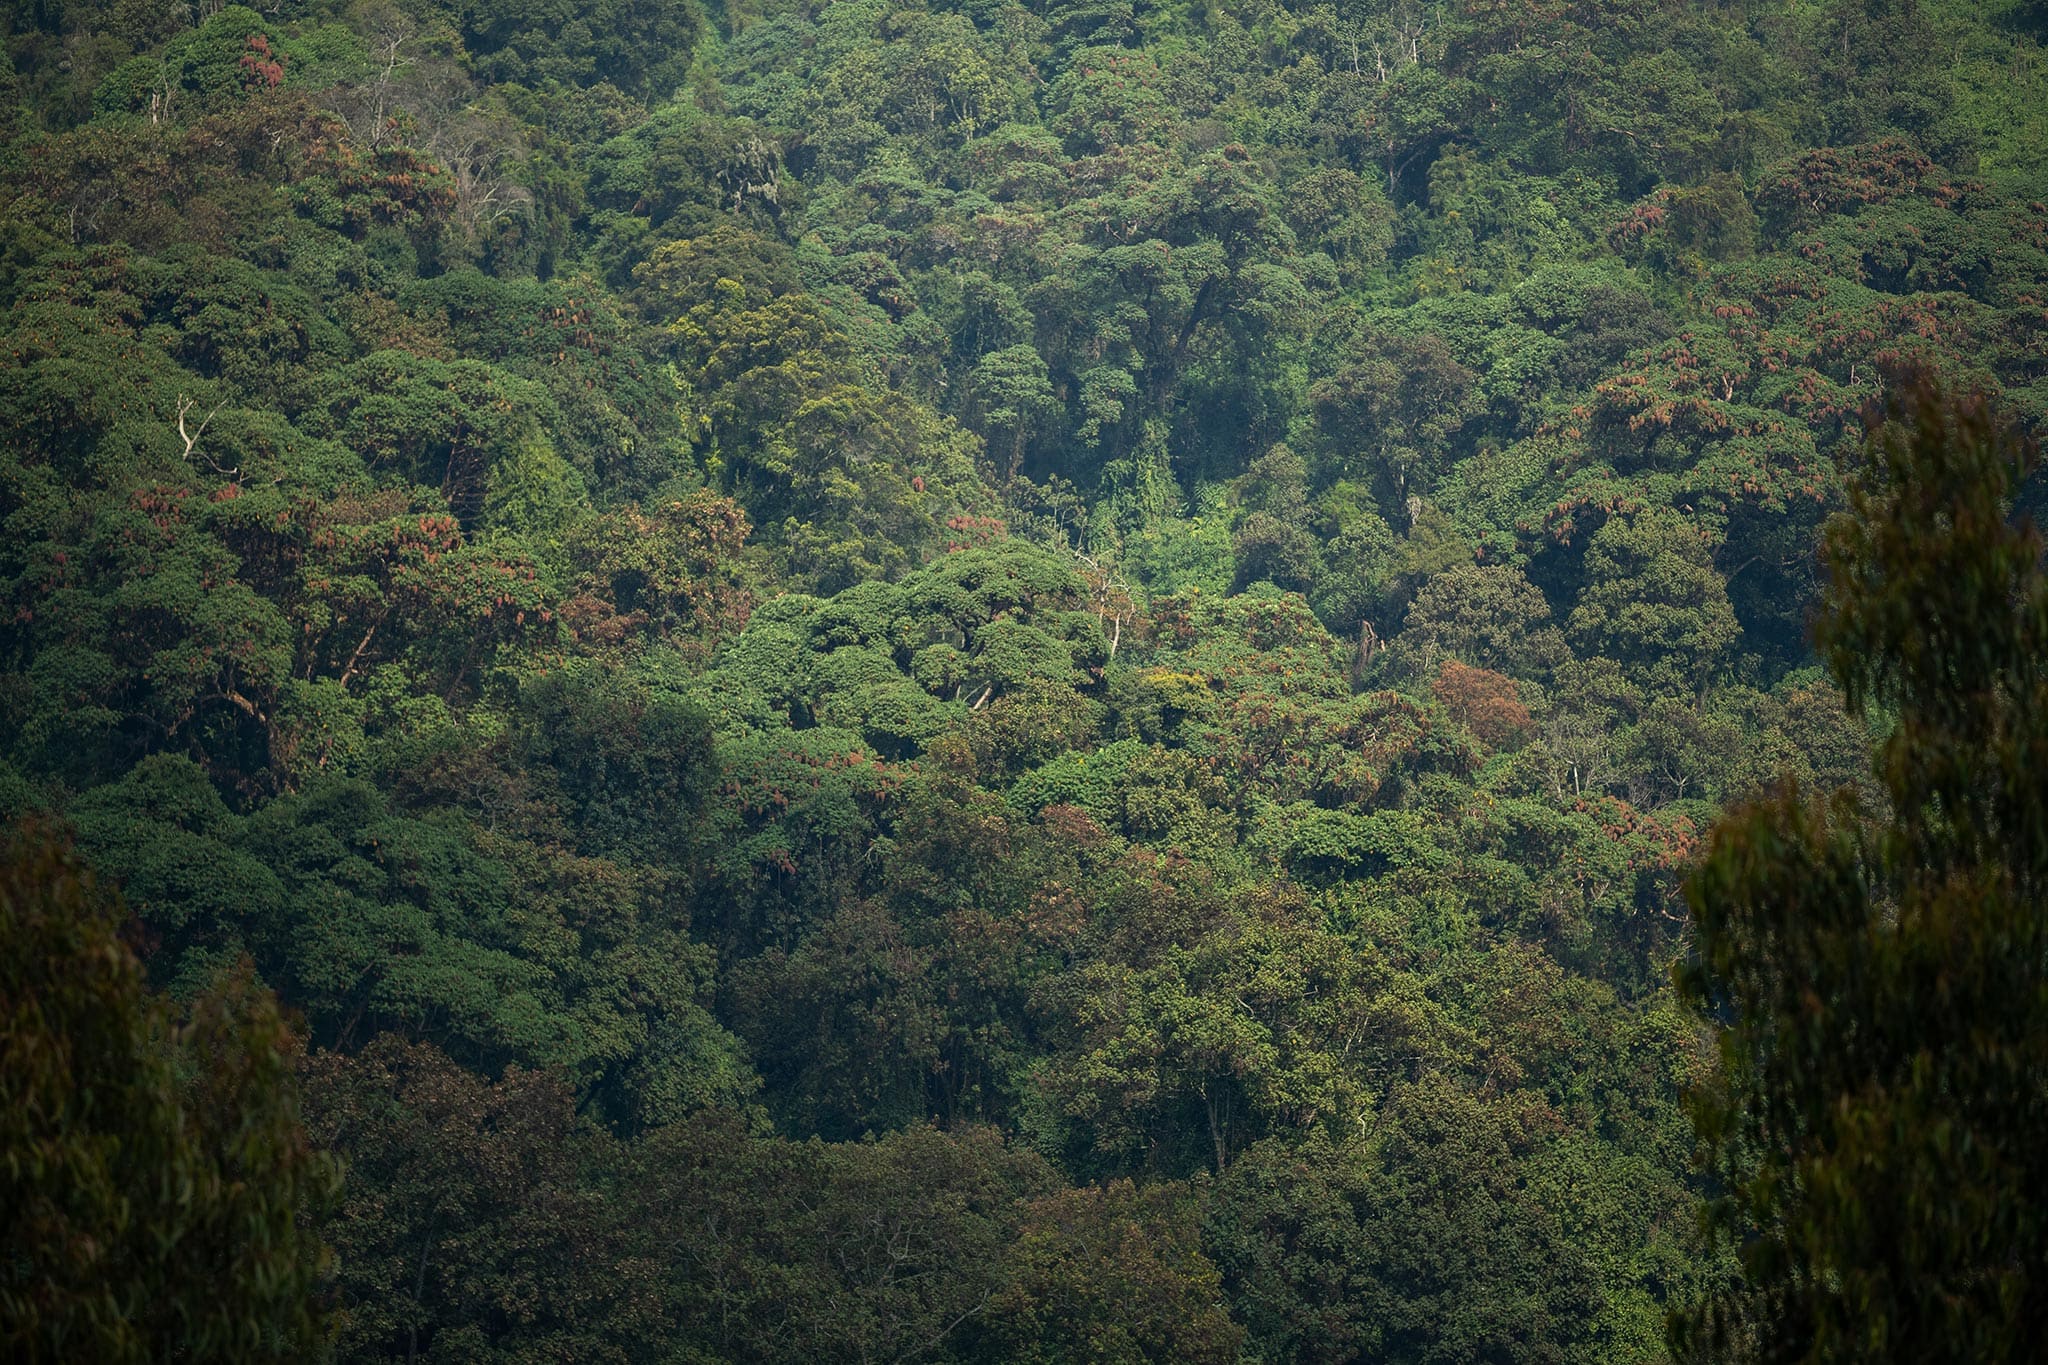 Rwanda's dense rainforests